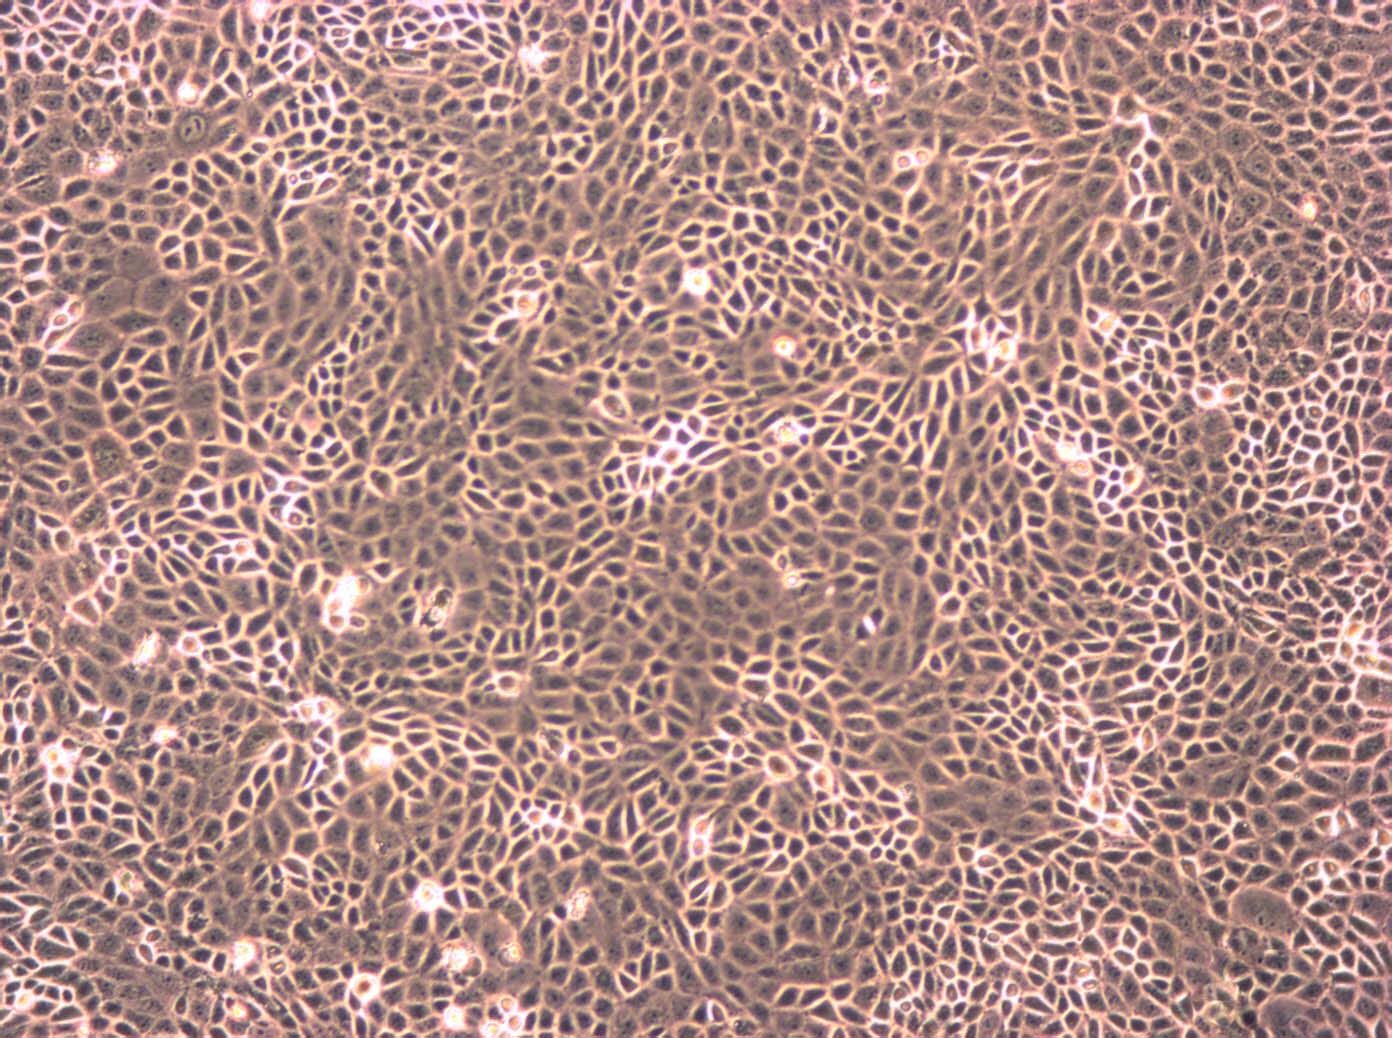 MCF-7B epithelioid cells人乳腺癌细胞系,MCF-7B epithelioid cells